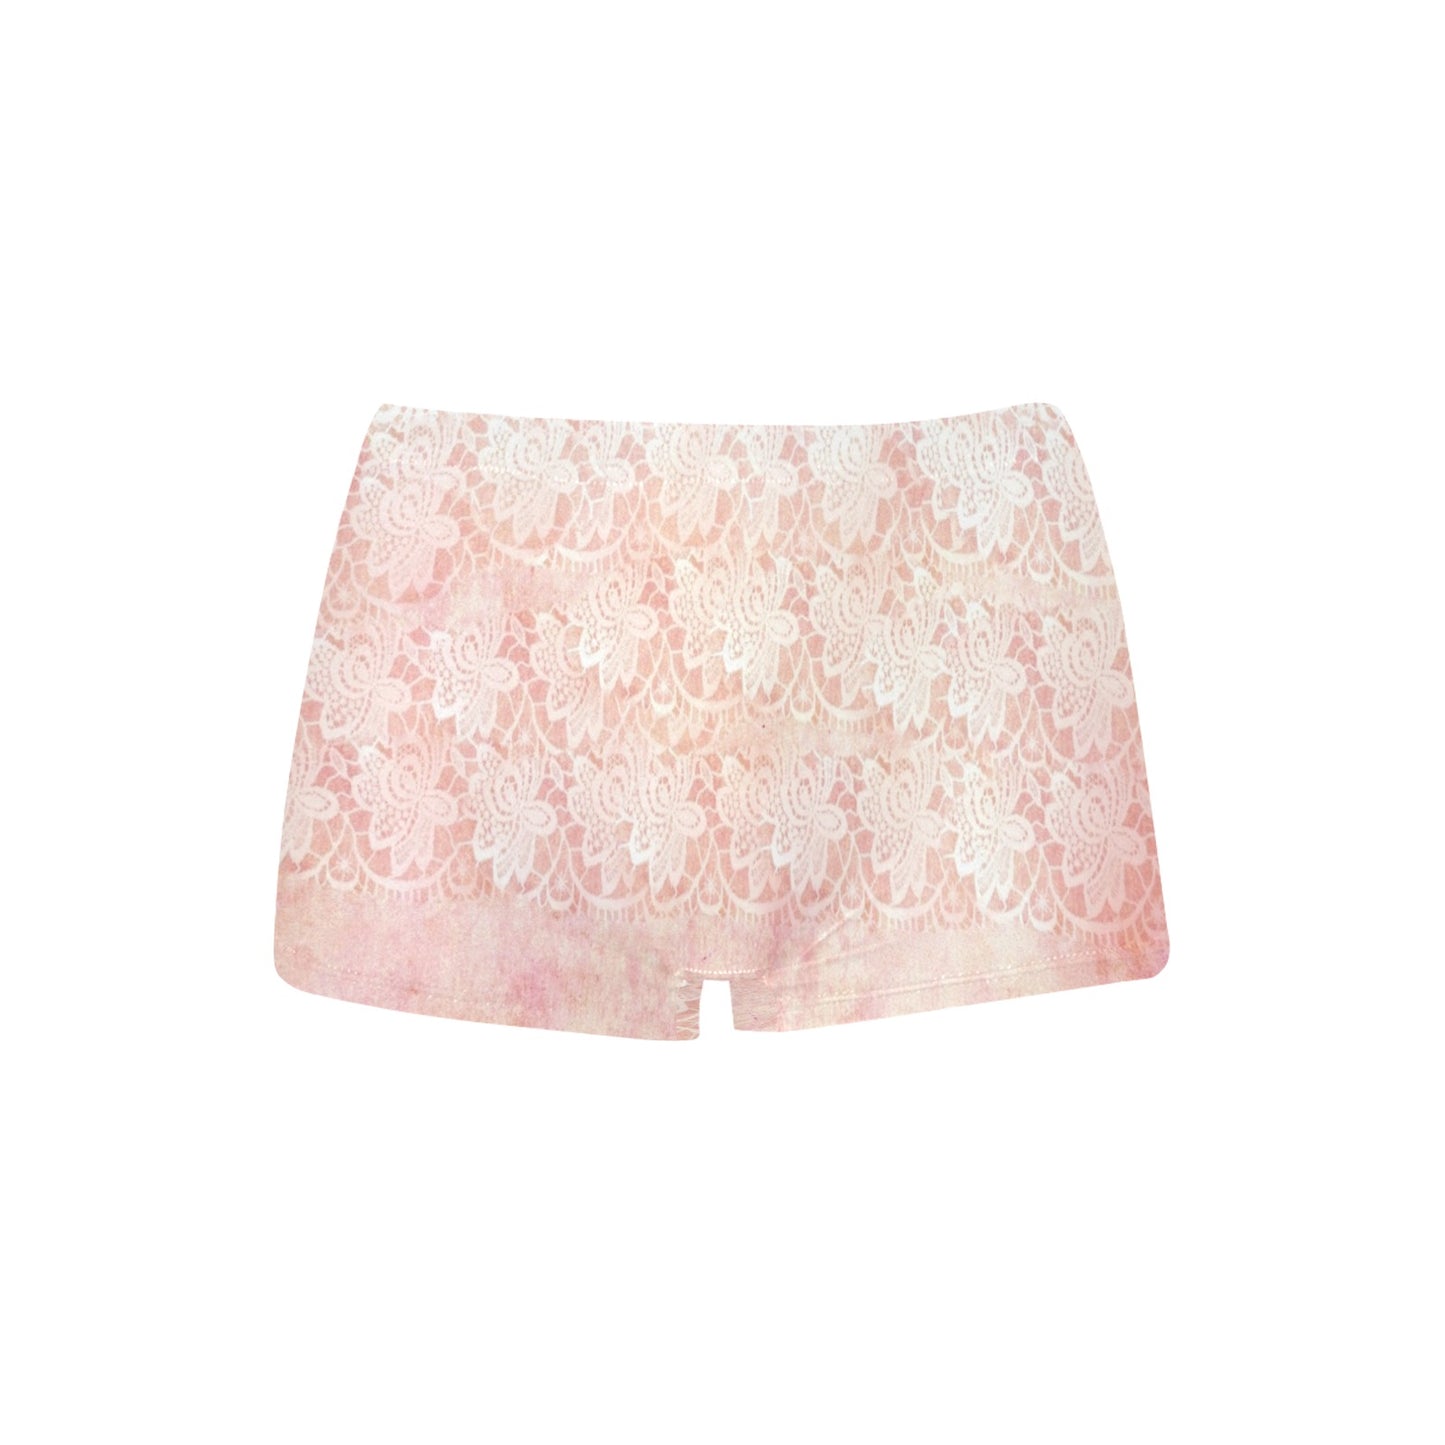 Printed Lace Boyshorts, daisy dukes, pum pum shorts, shortie shorts , design 38